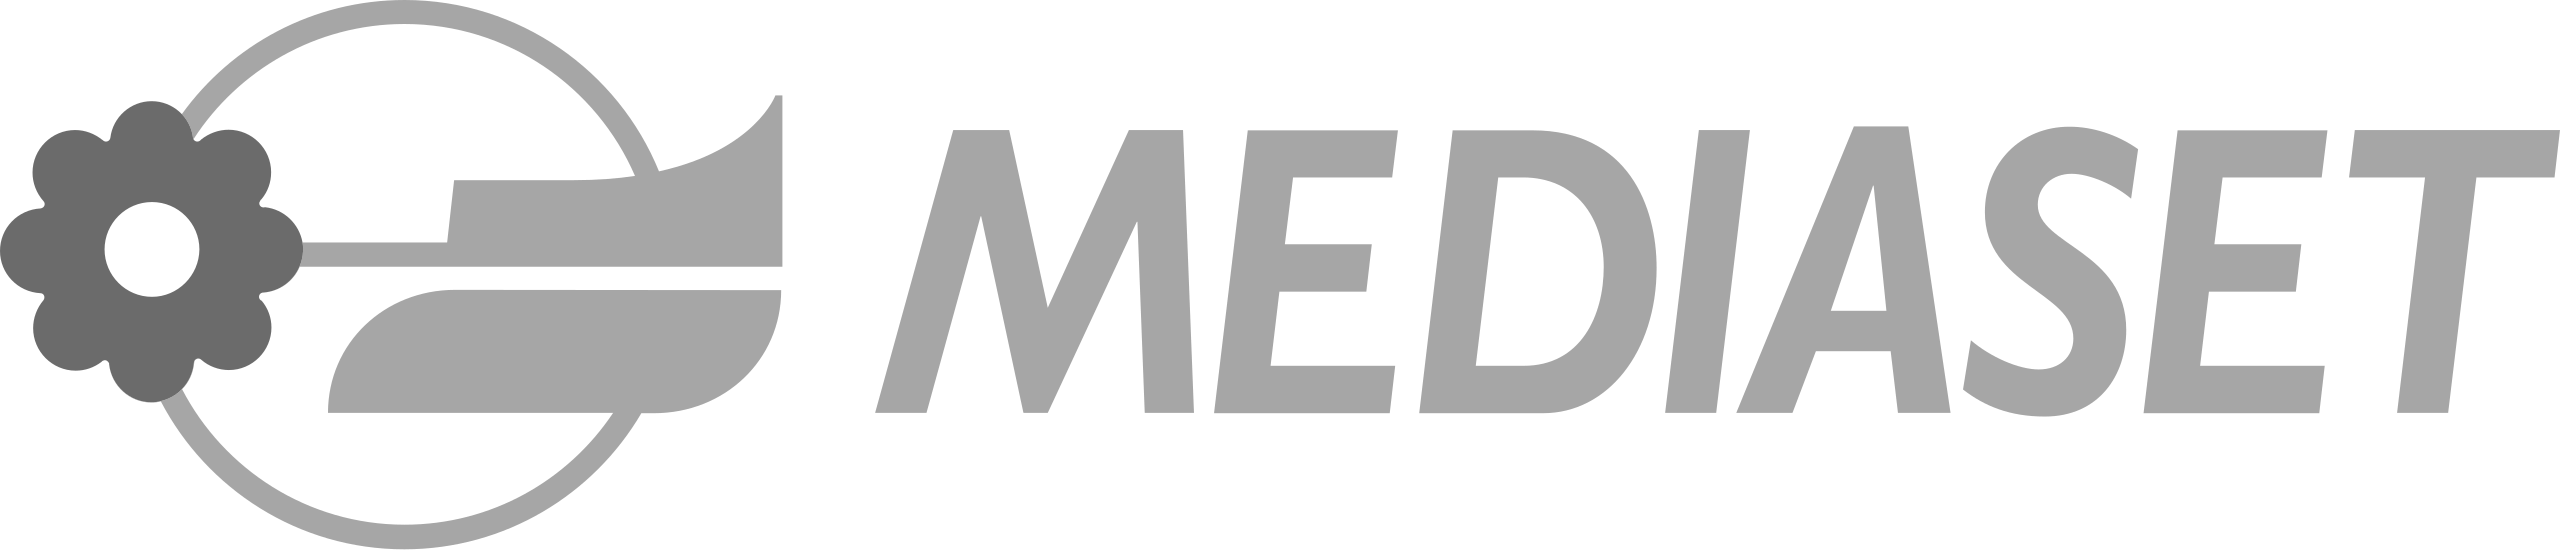 Mediaset-1